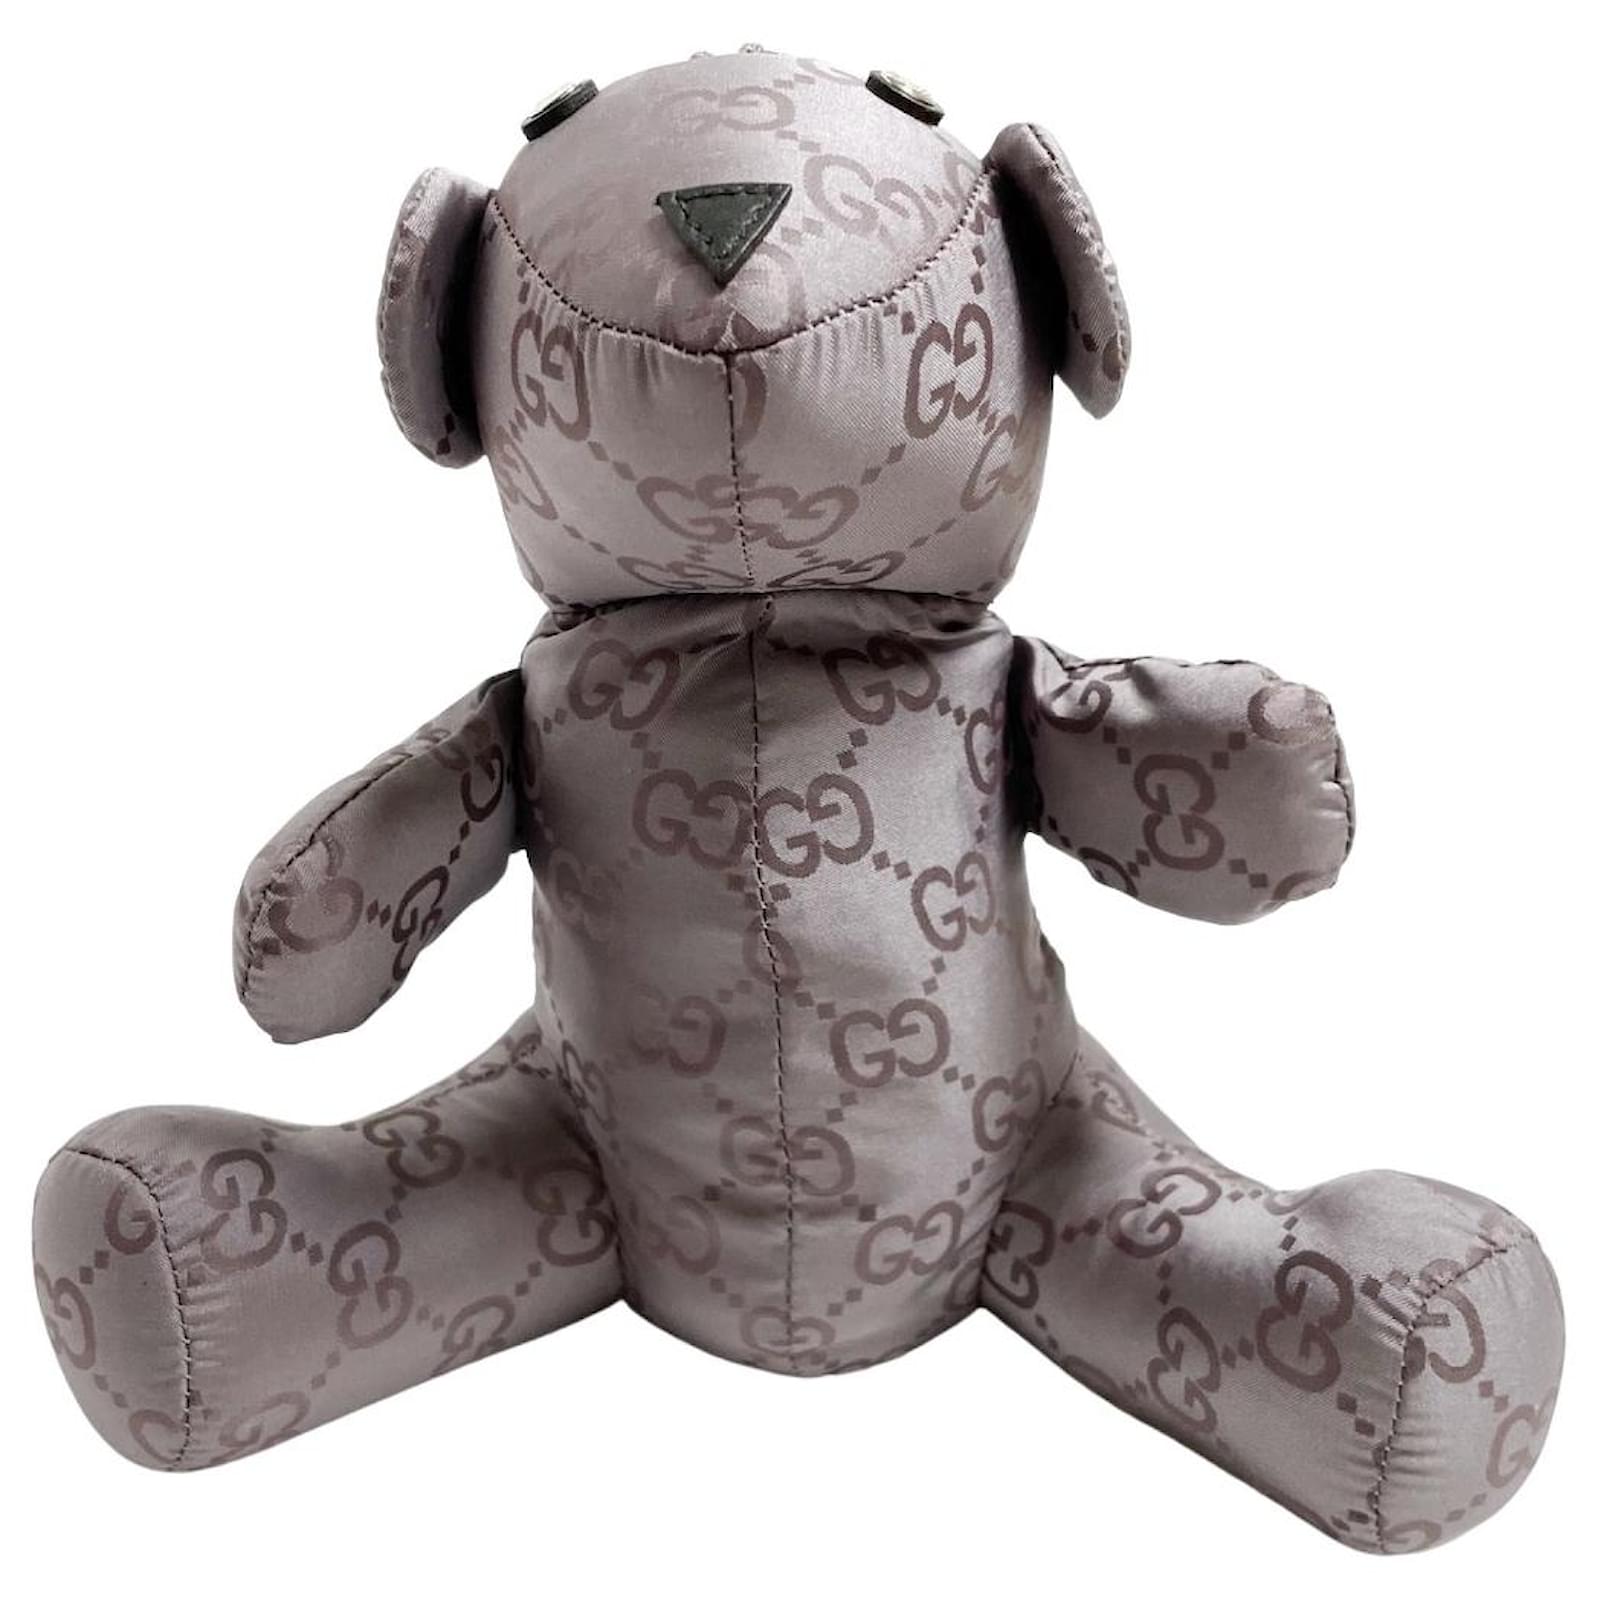 Gucci Monogrammed Teddy Bear  Teddy bear, Bear, Teddy bear toys